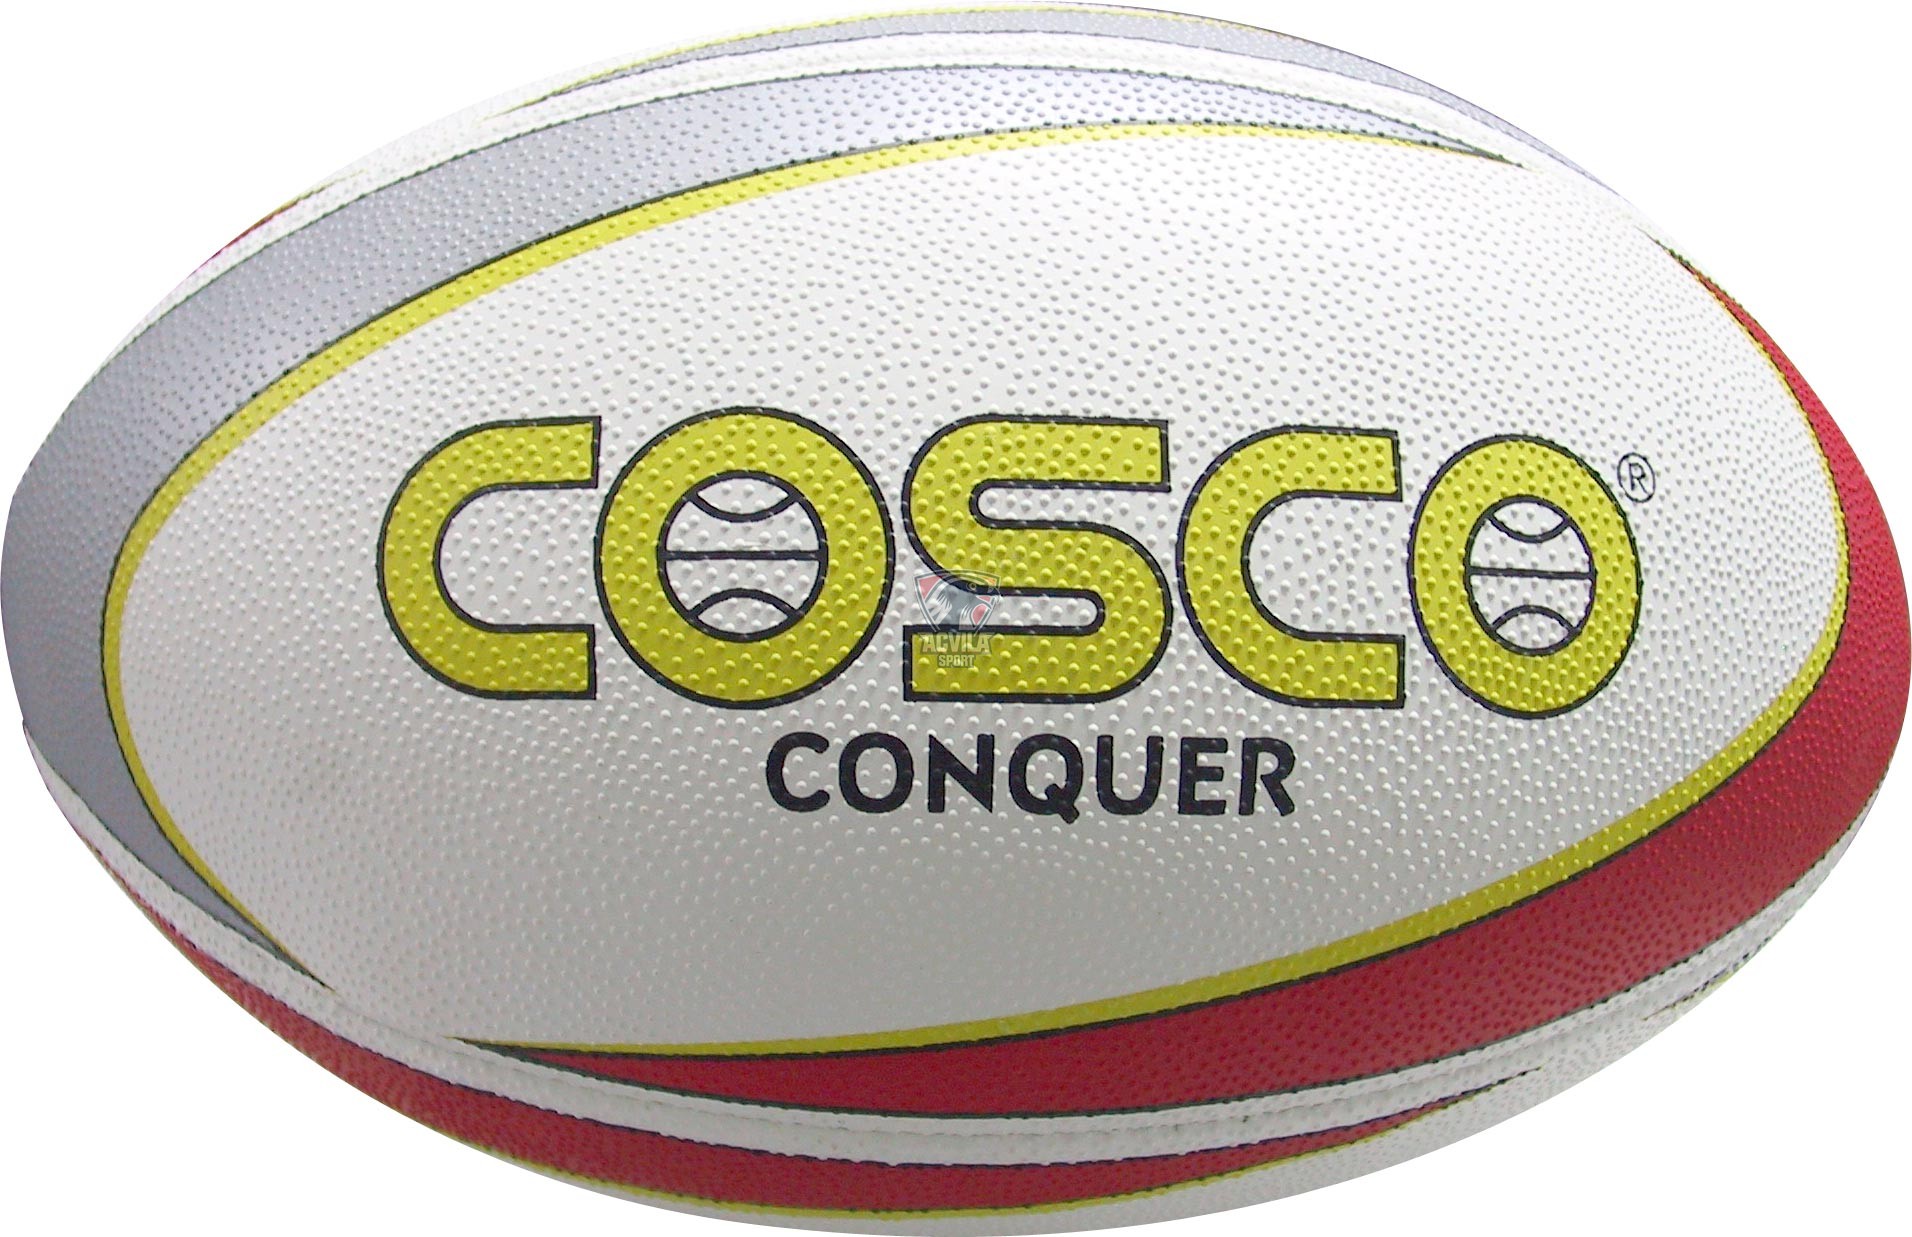 Photo acvilasport - Мячи для регби COSCO Conquer №5